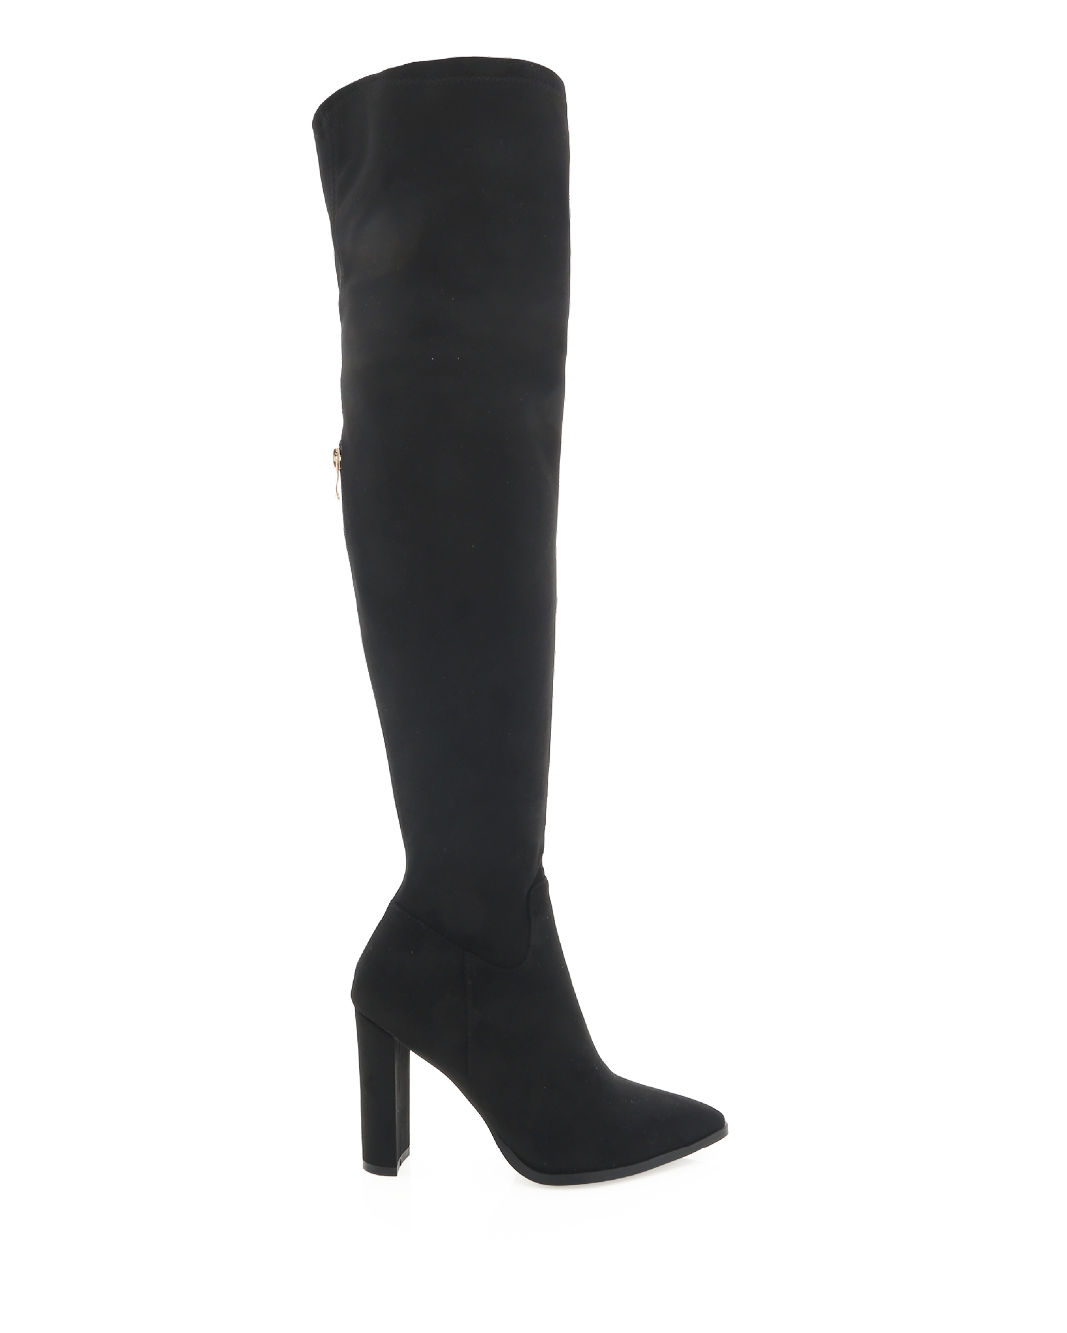 KYLER - BLACK SUEDE-Boots-Billini-BILLINI USA